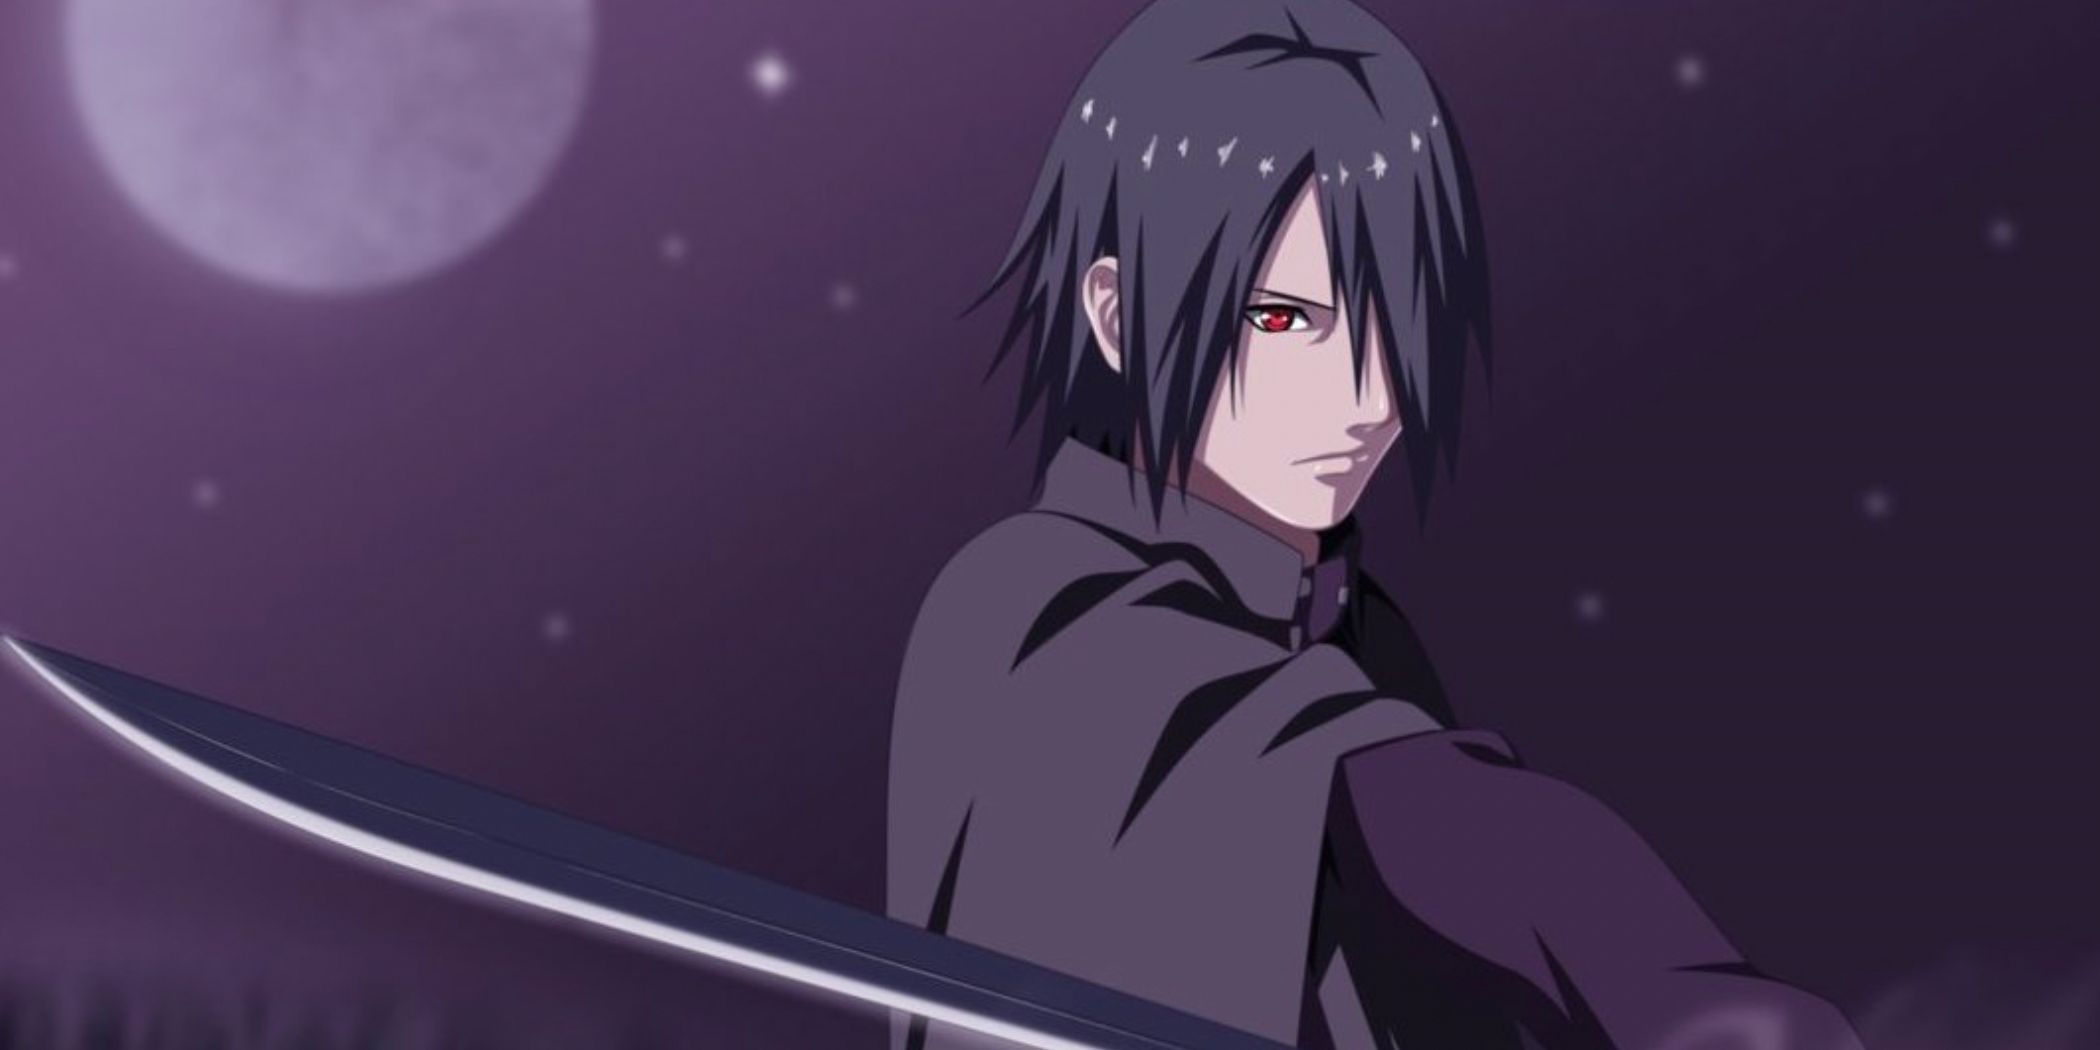 Sasuke and his sword under the moon in Boruto